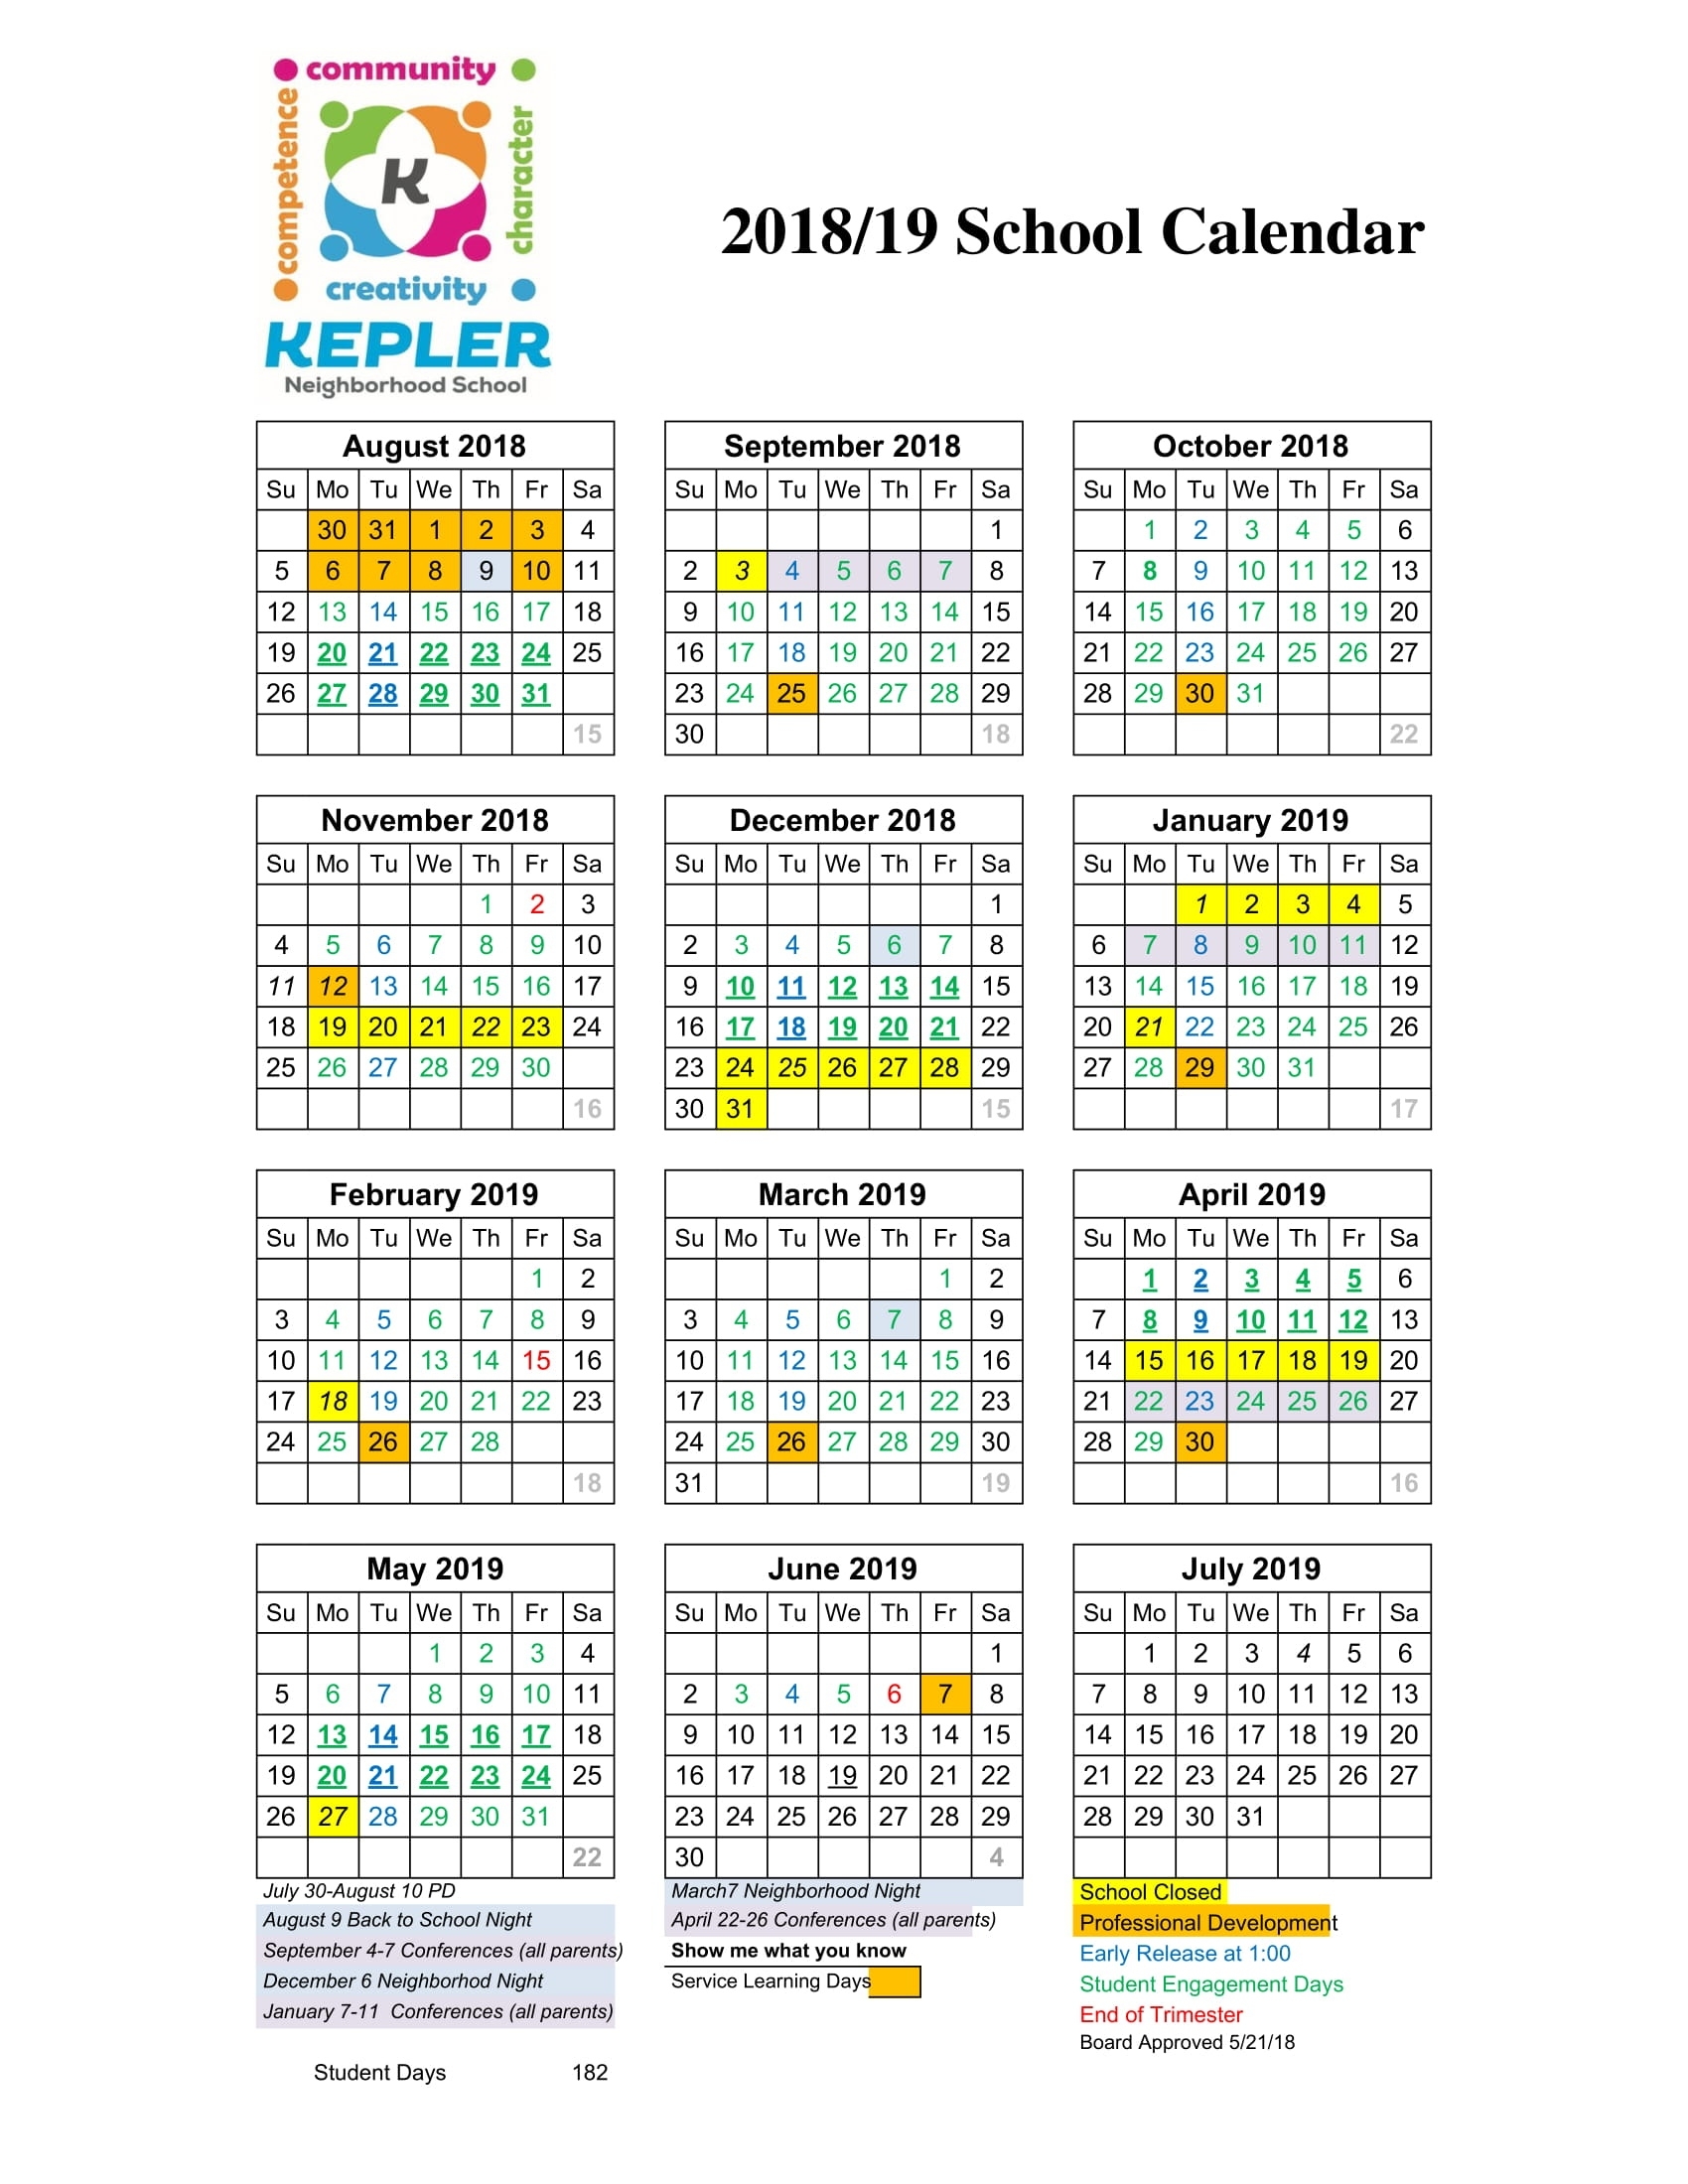 2018 - 2019 Kepler School Calendar - Kepler Neighborhood School Number 4 School Calendar